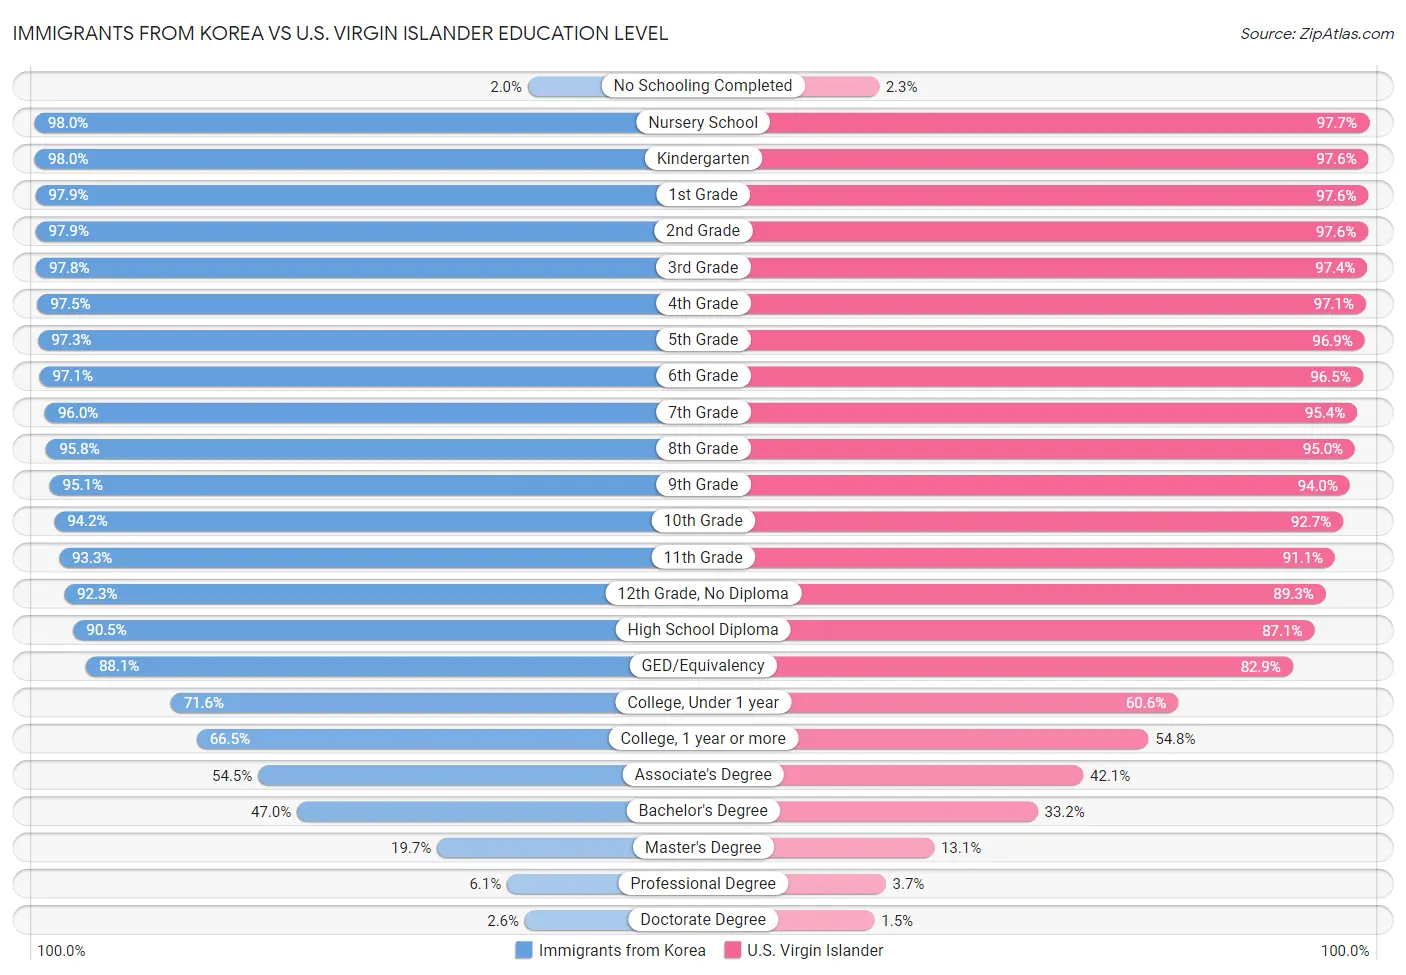 Immigrants from Korea vs U.S. Virgin Islander Education Level